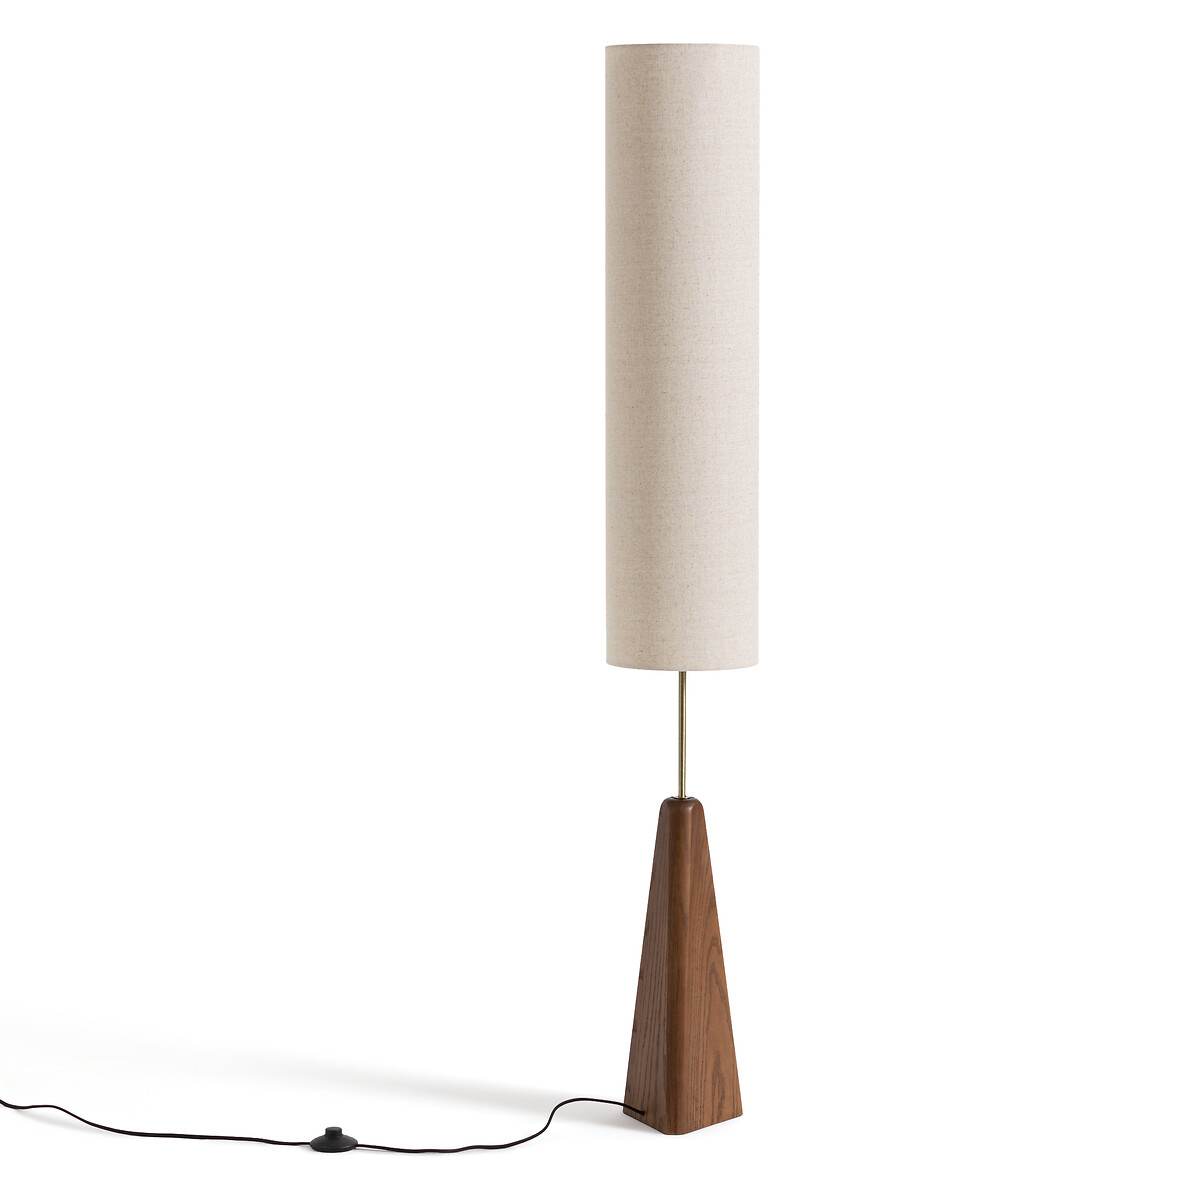 Nestwood Walnut-Stained Solid Oak Floor Lamp